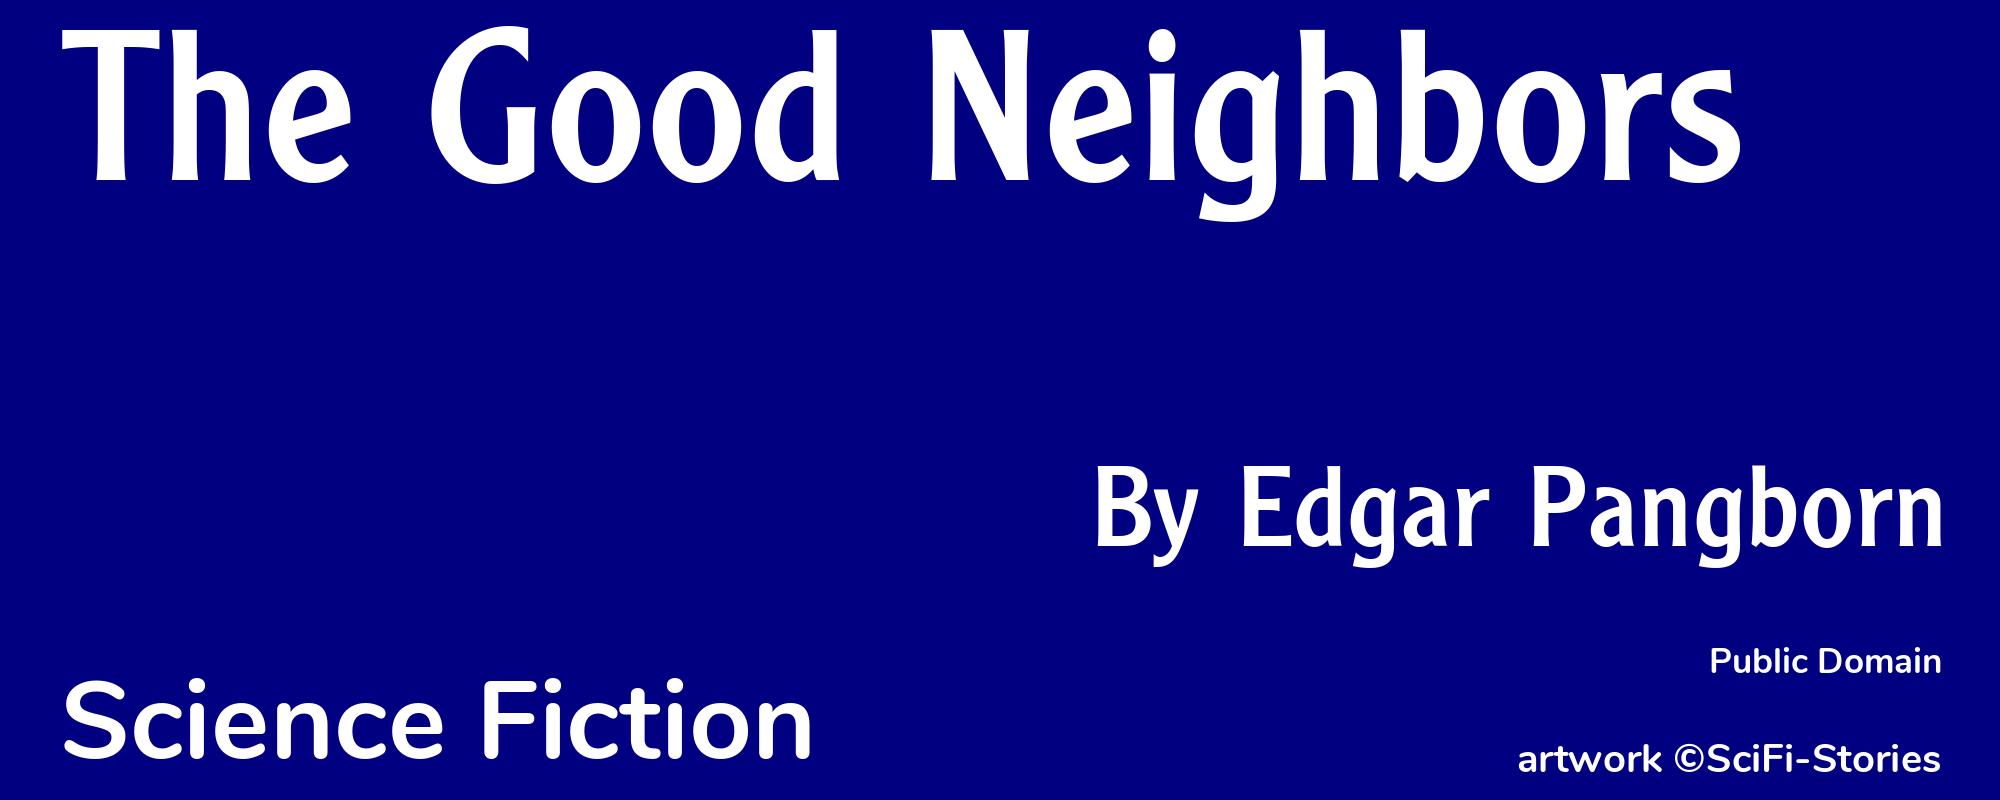 The Good Neighbors - Cover